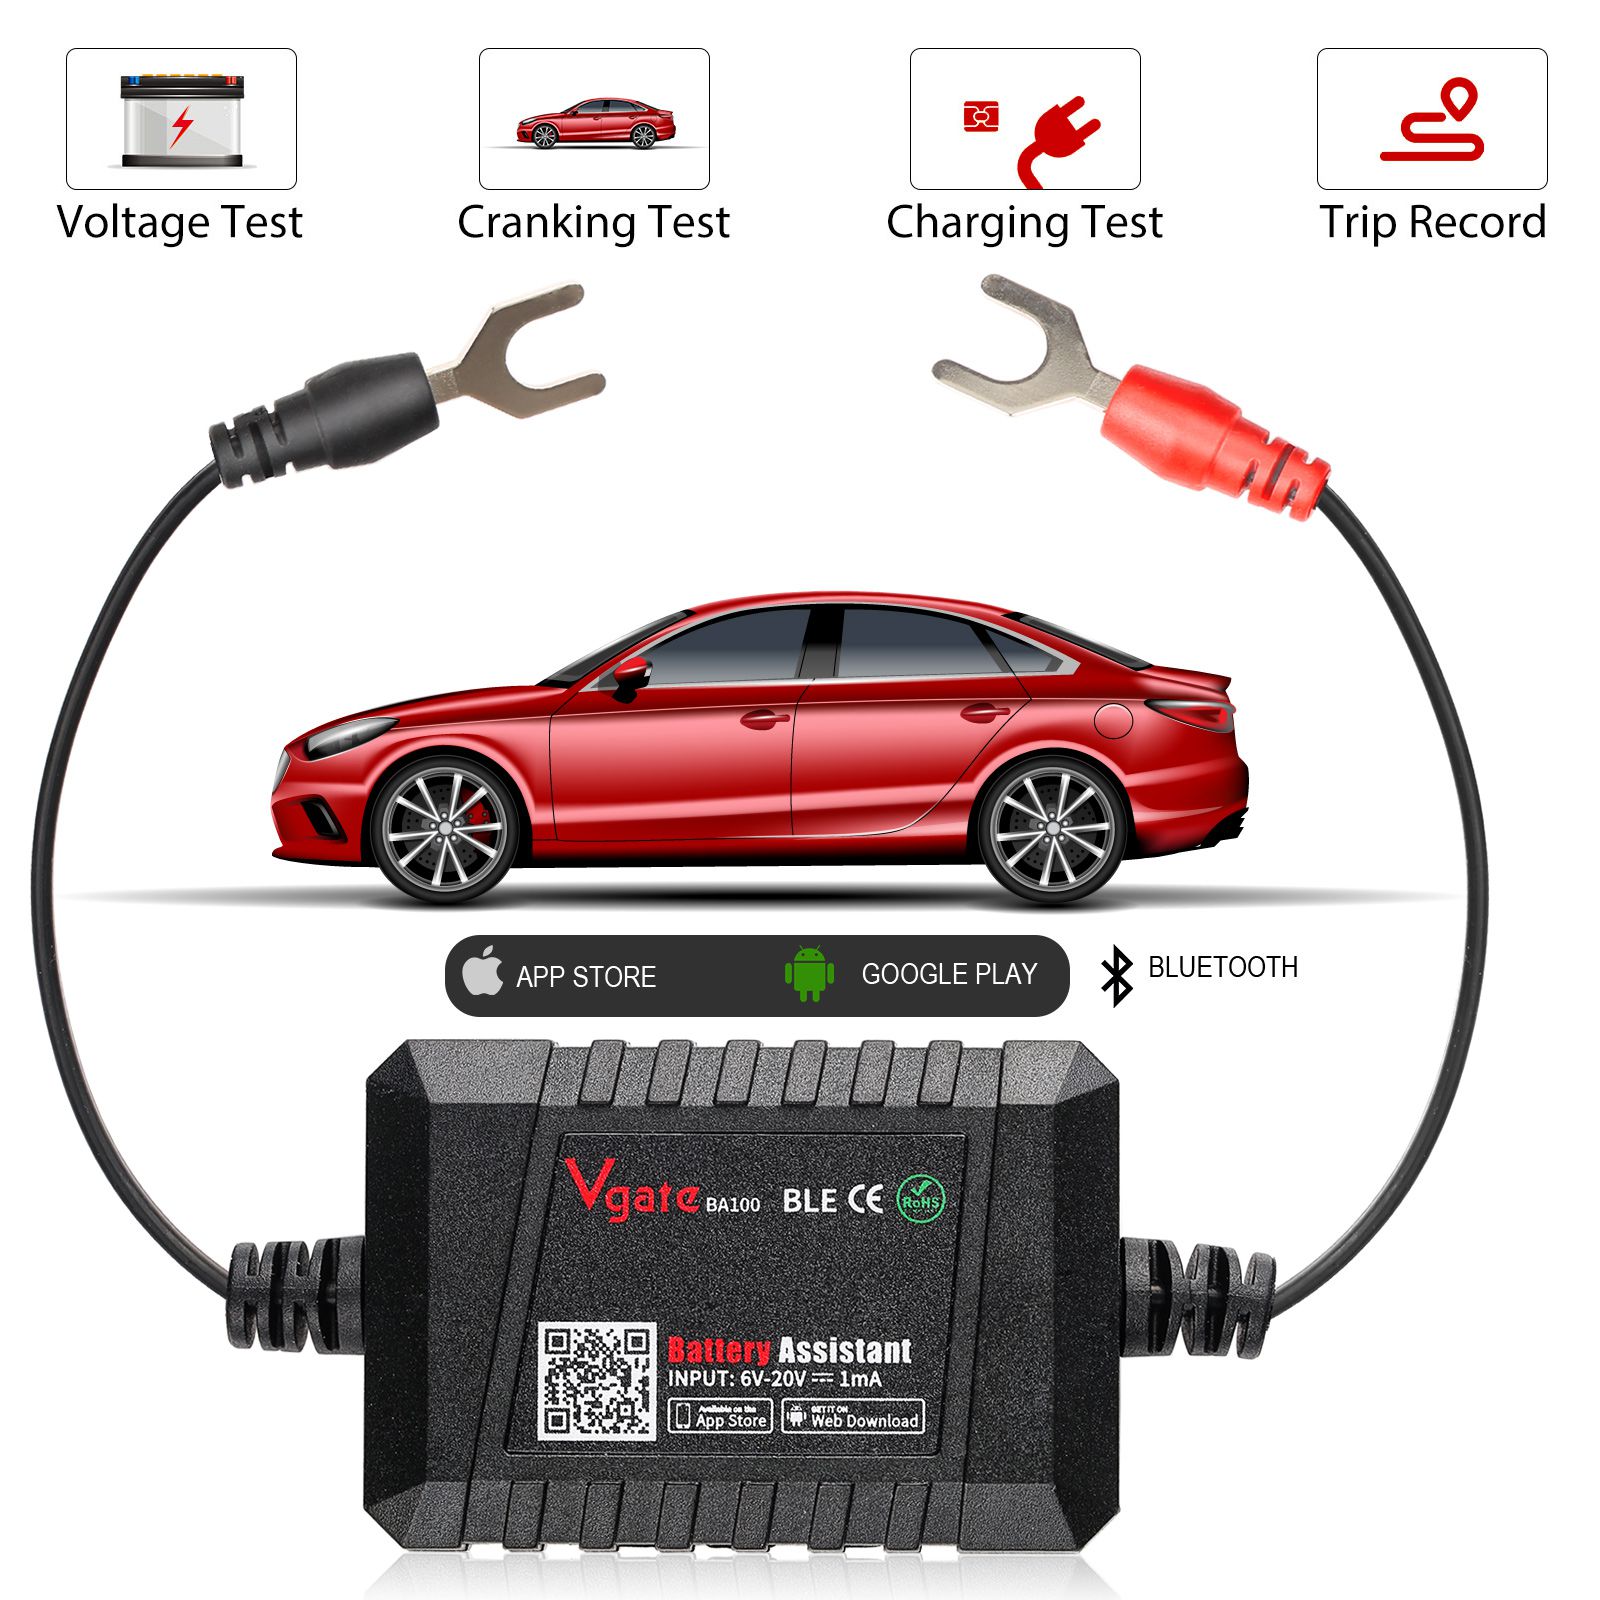 GODIAG GB101 Battery Assistant BlueTooth 4.0 무선 6-20V 자동차 배터리 부하 측정기 Android 및 iOS 진단 분석기 모니터